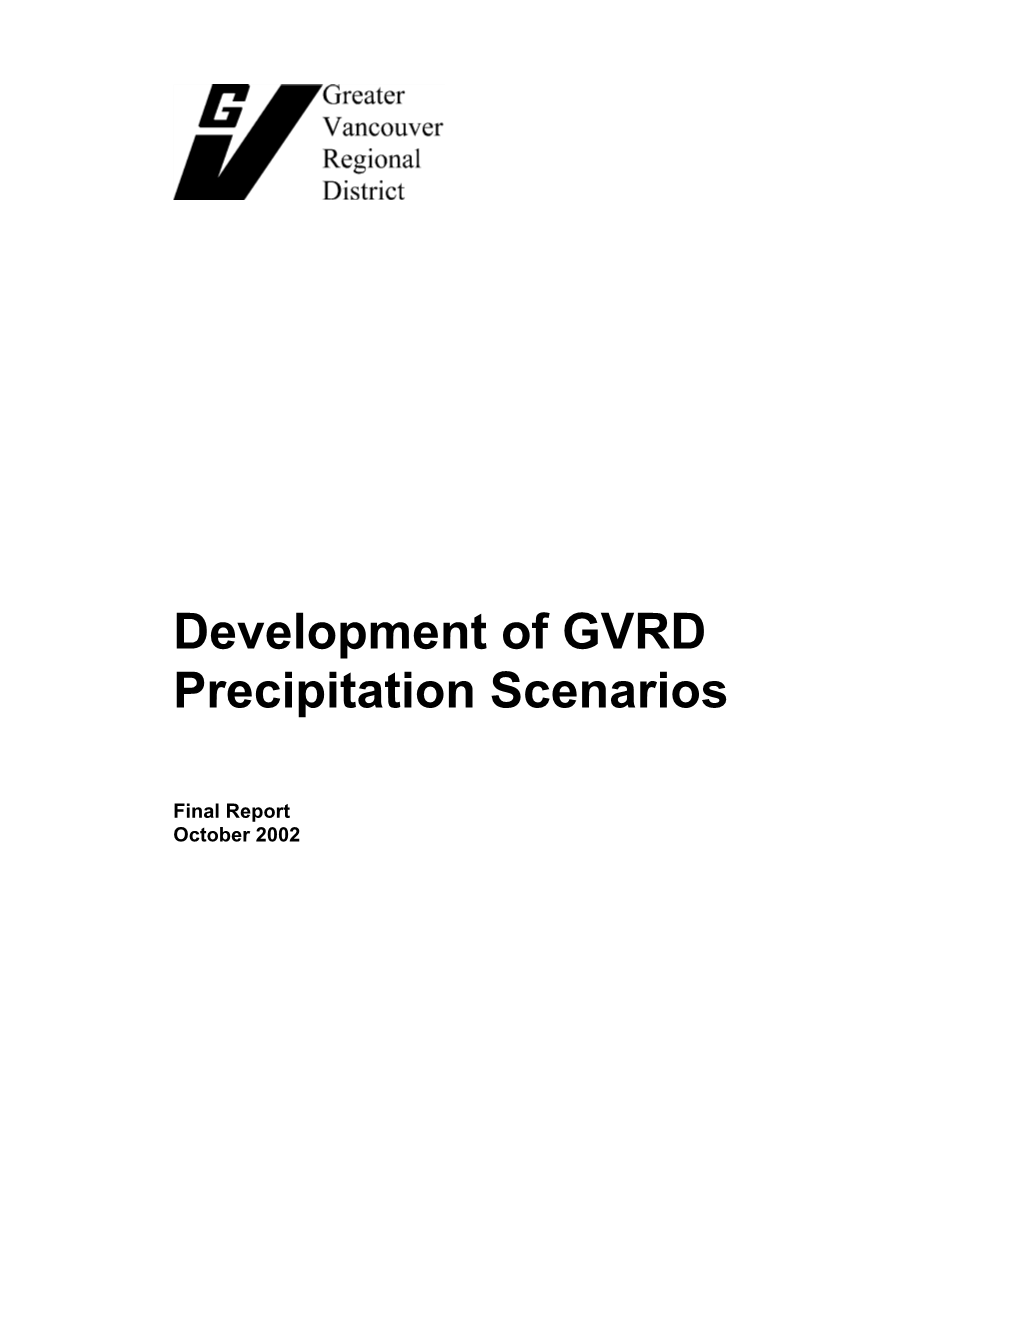 Development of GVRD Precipitation Scenarios